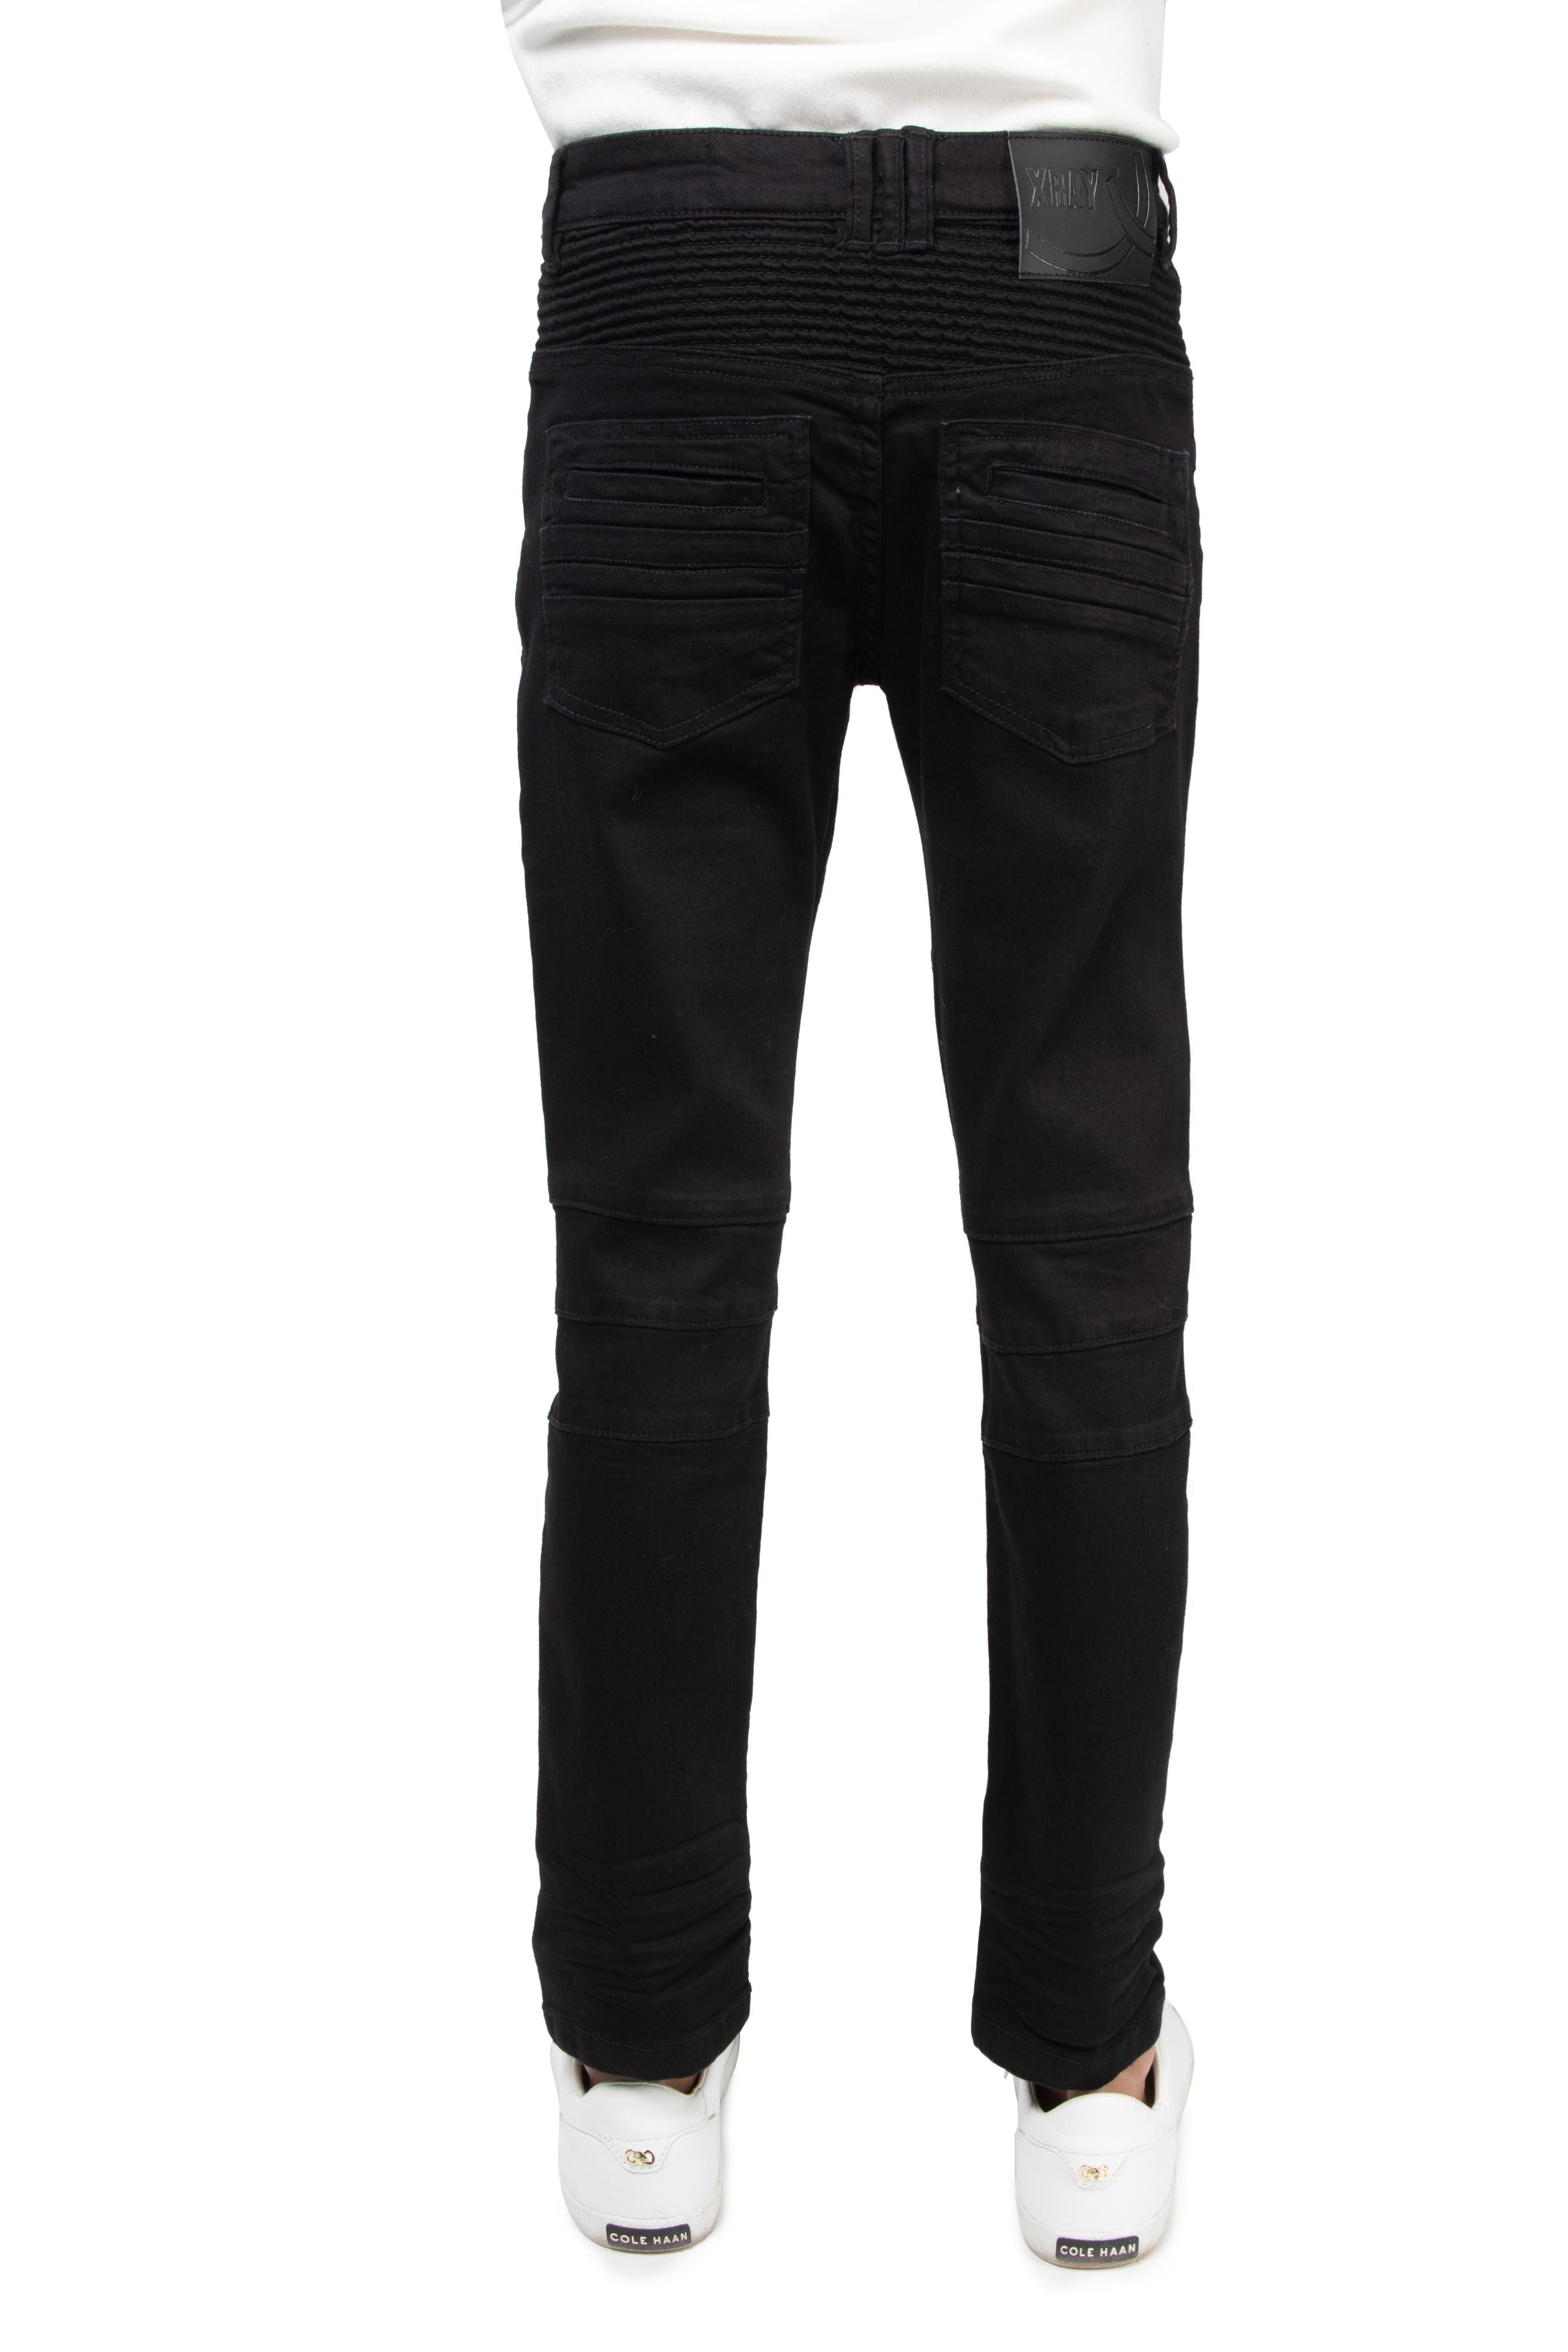 BXP-96107  XRAY Slim Fit Biker Pants for Boys Skinny Moto Jeans